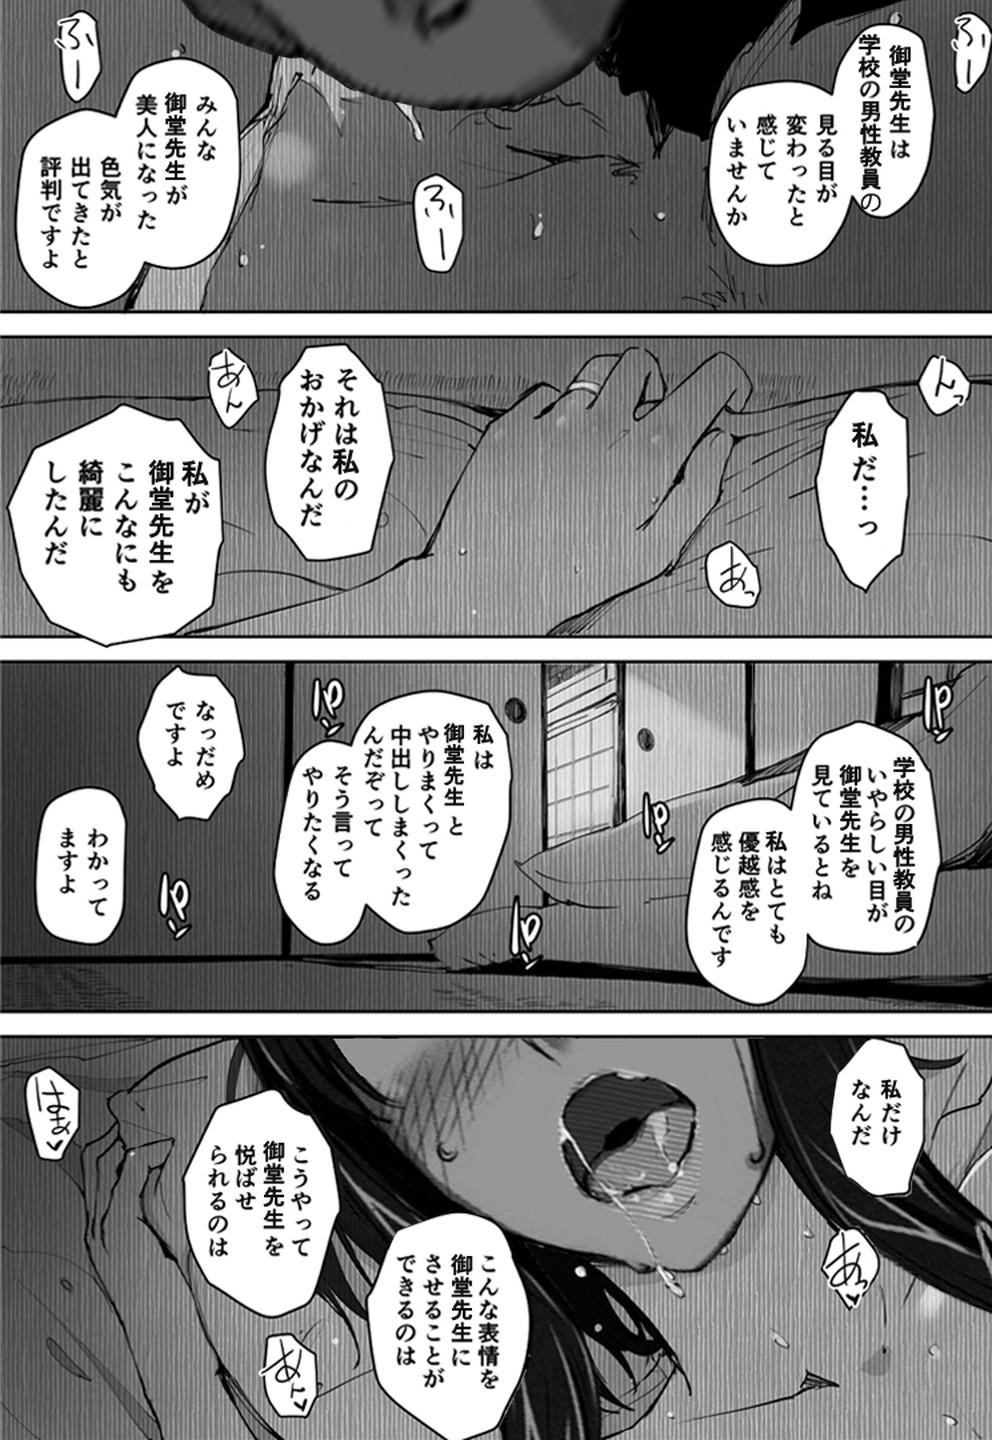 Sakiko-san in delusion Vol.1 Ver.1.1 ~Sakiko-san's circumstance at an educational training~ Stupid Sakiko (collage) on-going 100